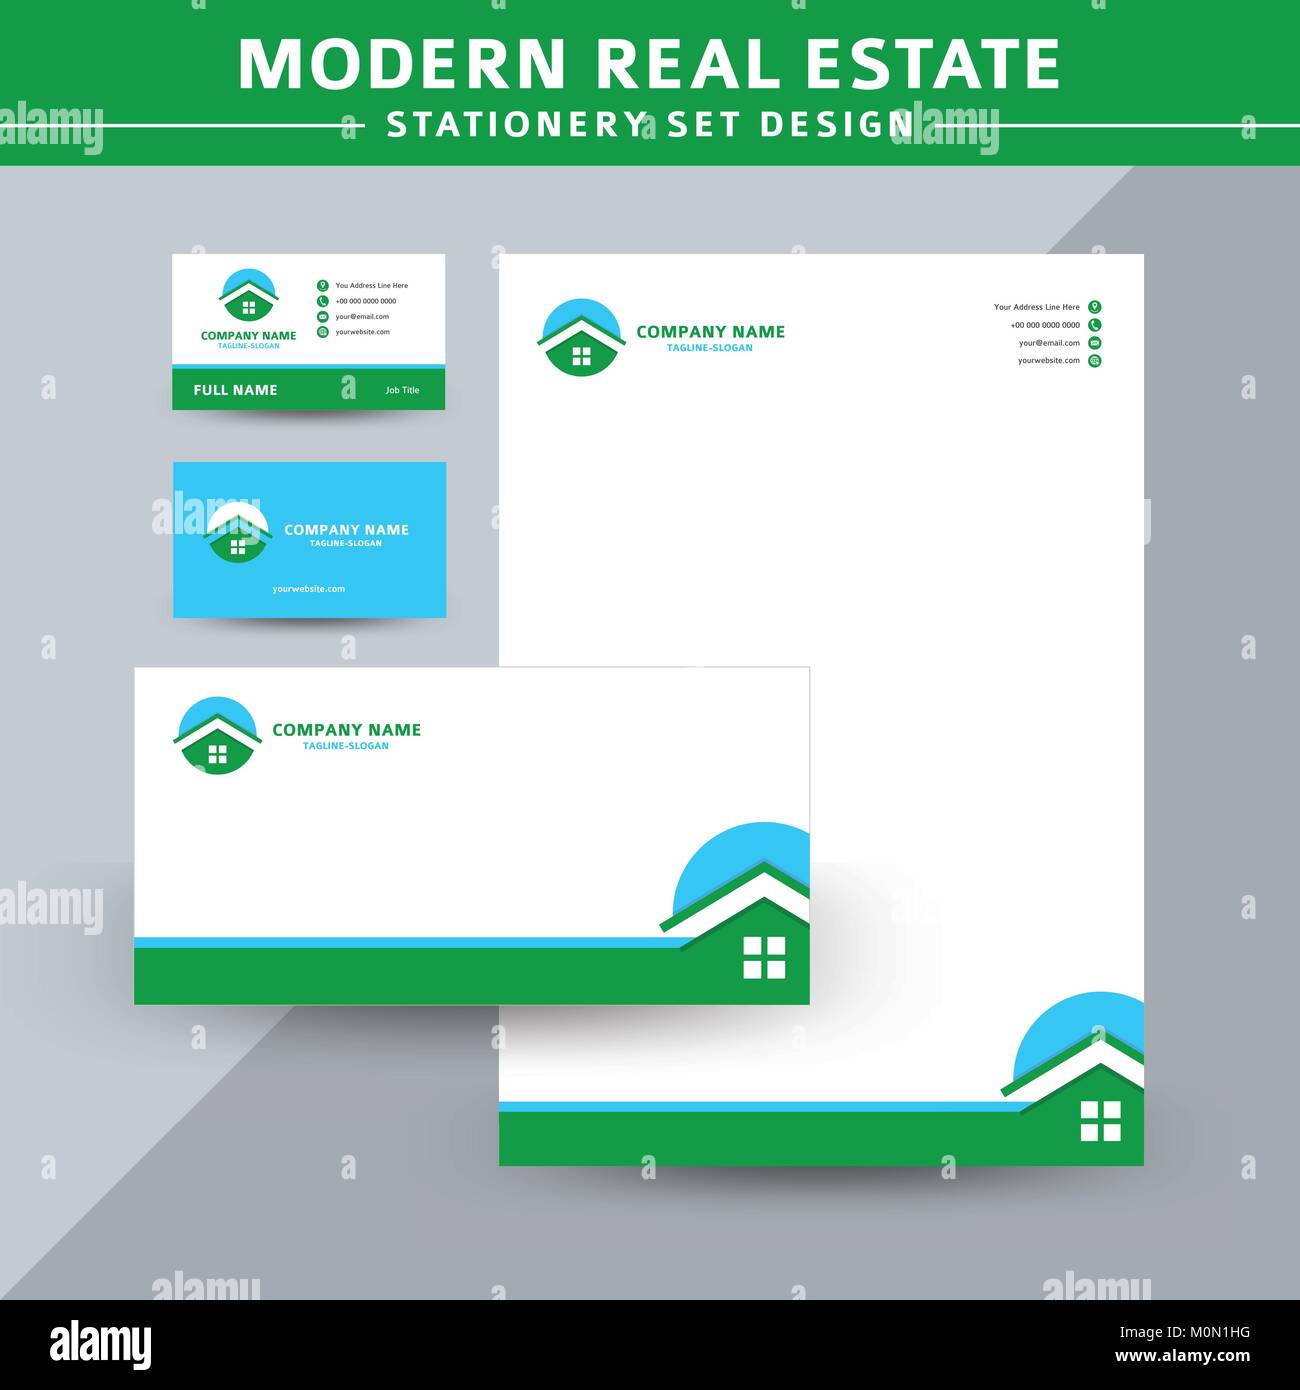 Modern Real Estate Stationery Set Vector Design Stock Vector